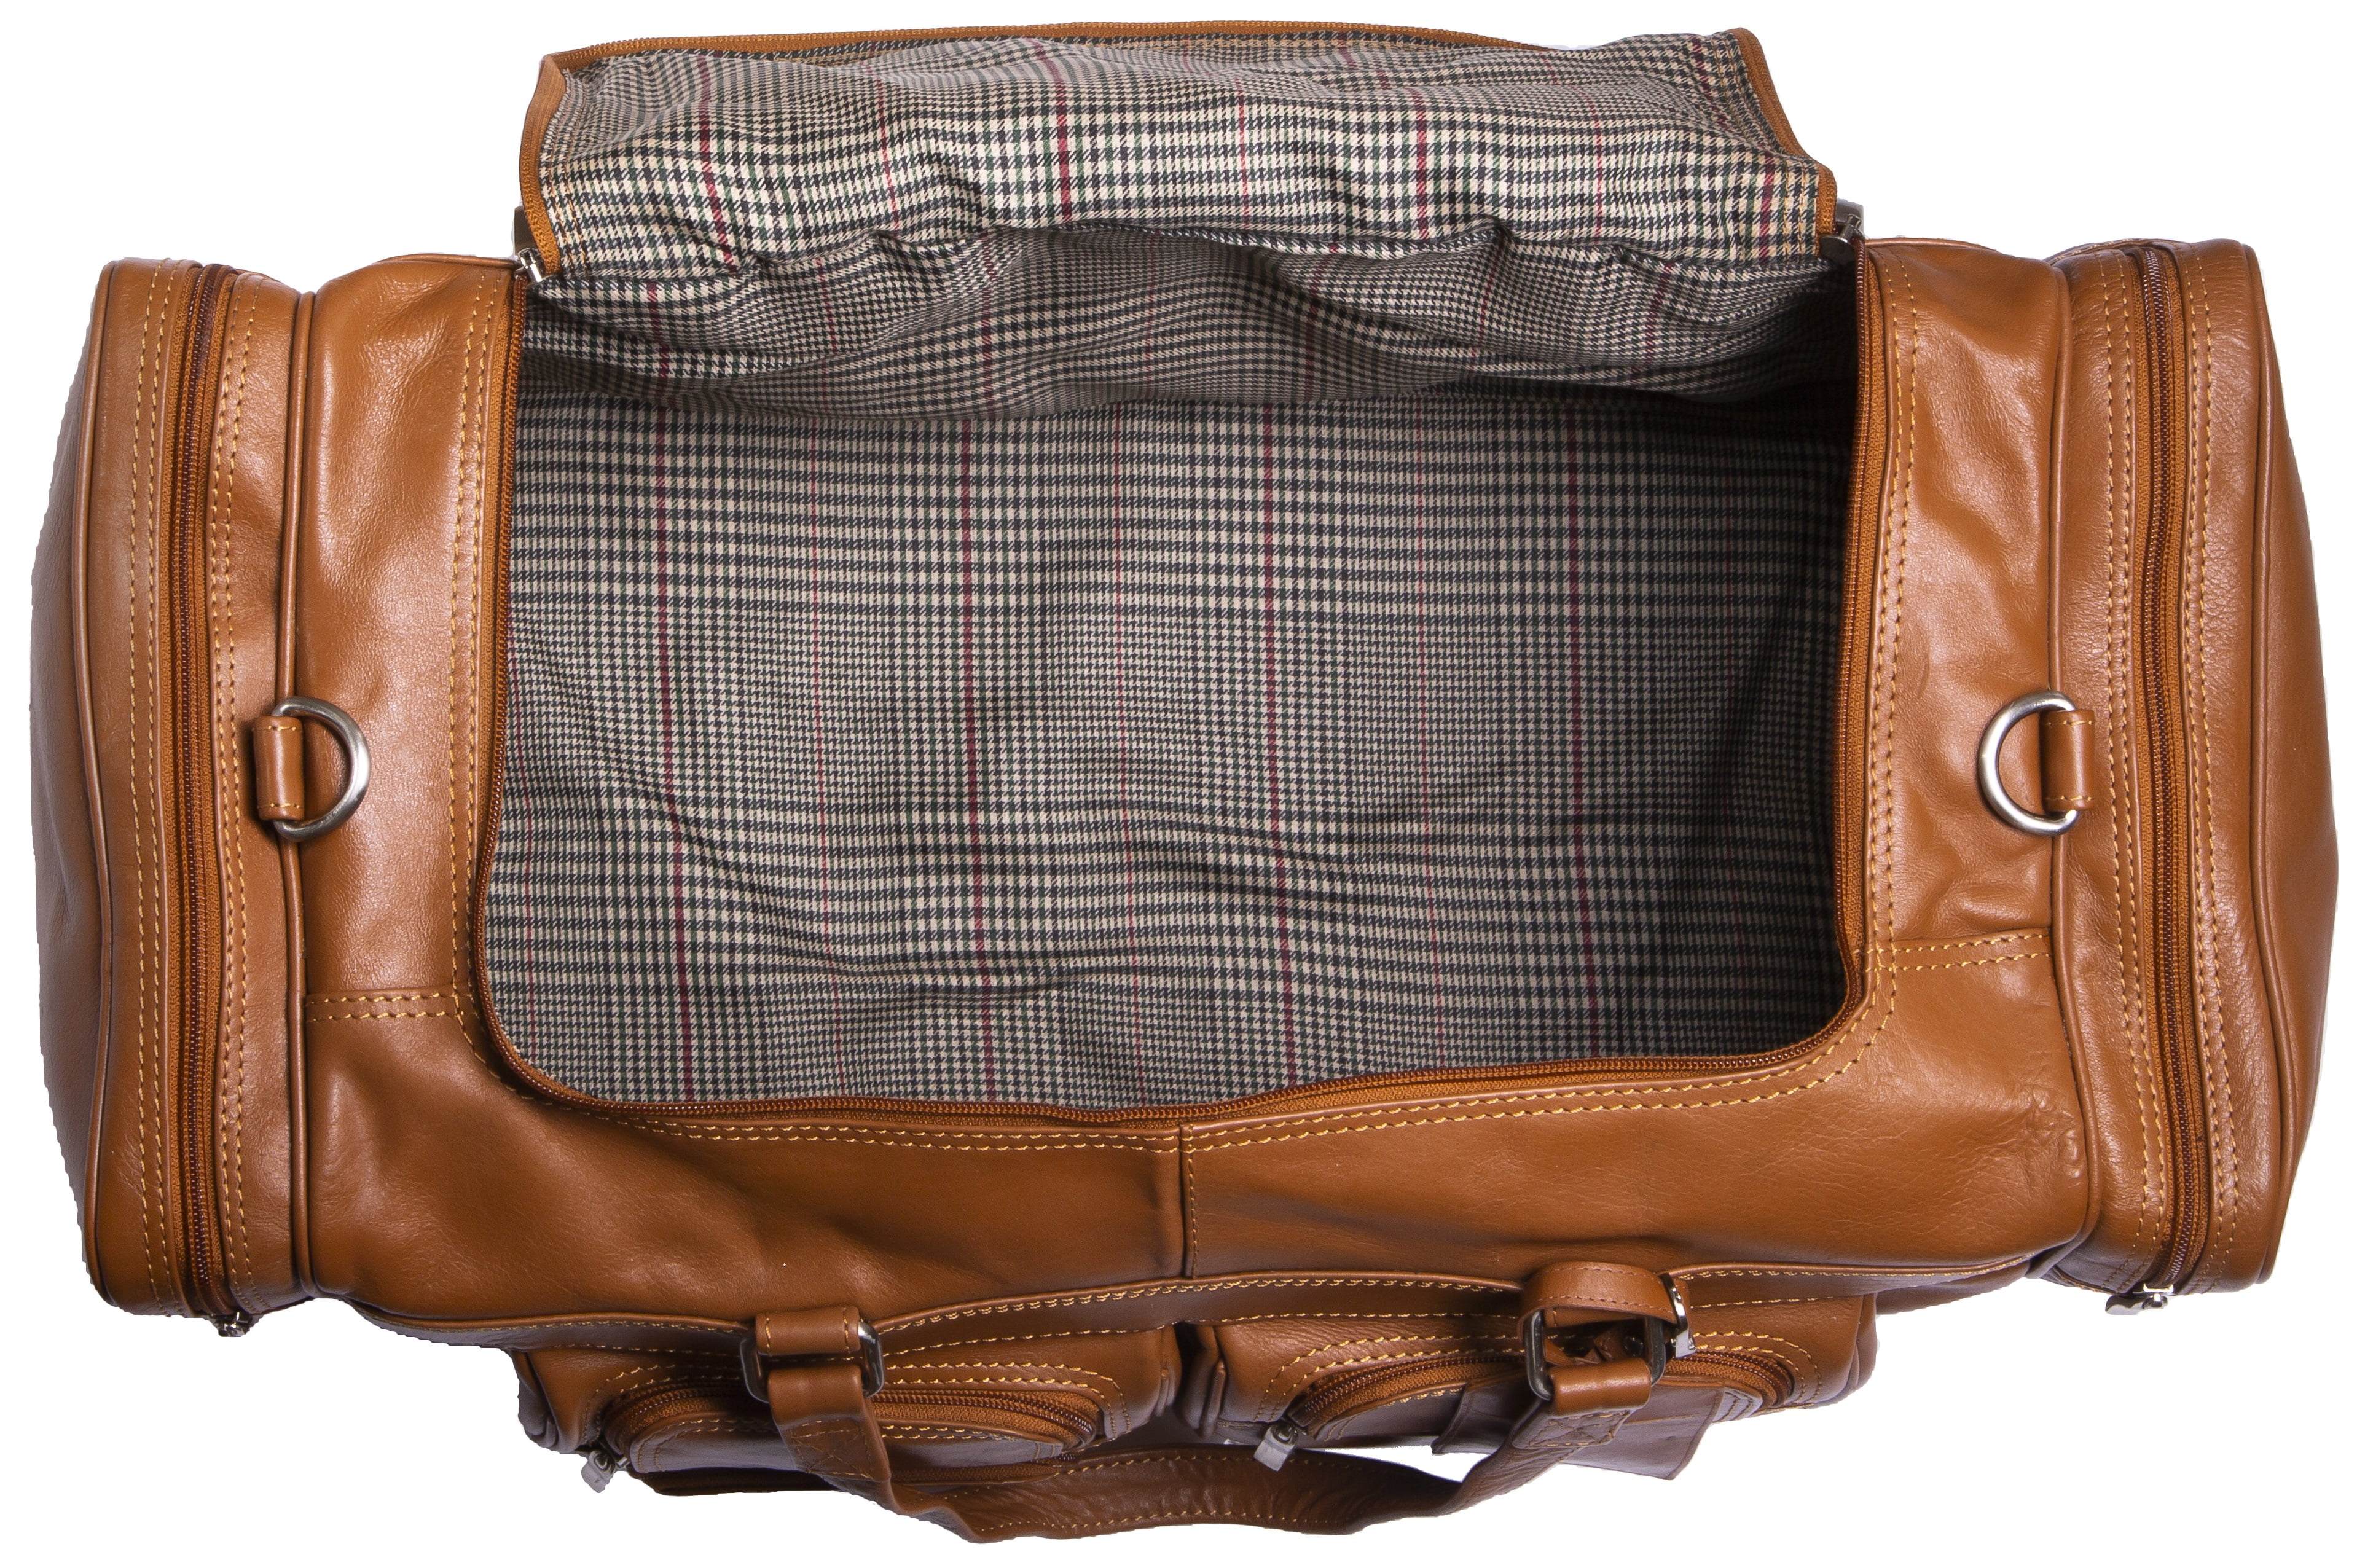 Viosi Vintage Expandable Duffel Bag Leather Weekender Luggage Travel Bag